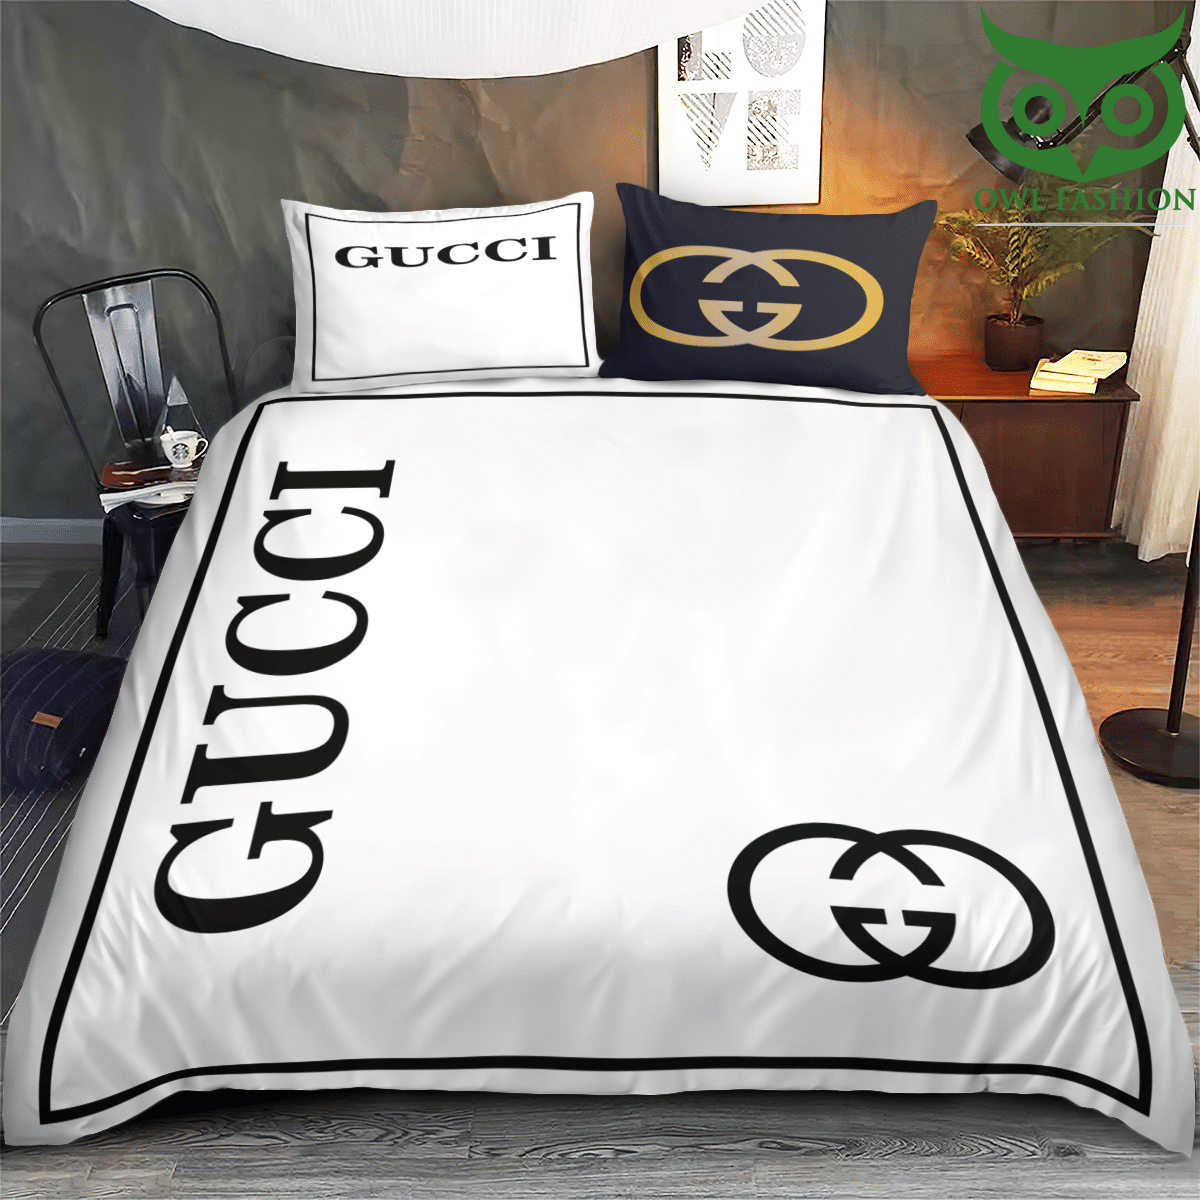 137 Black and white Gucci bedding set